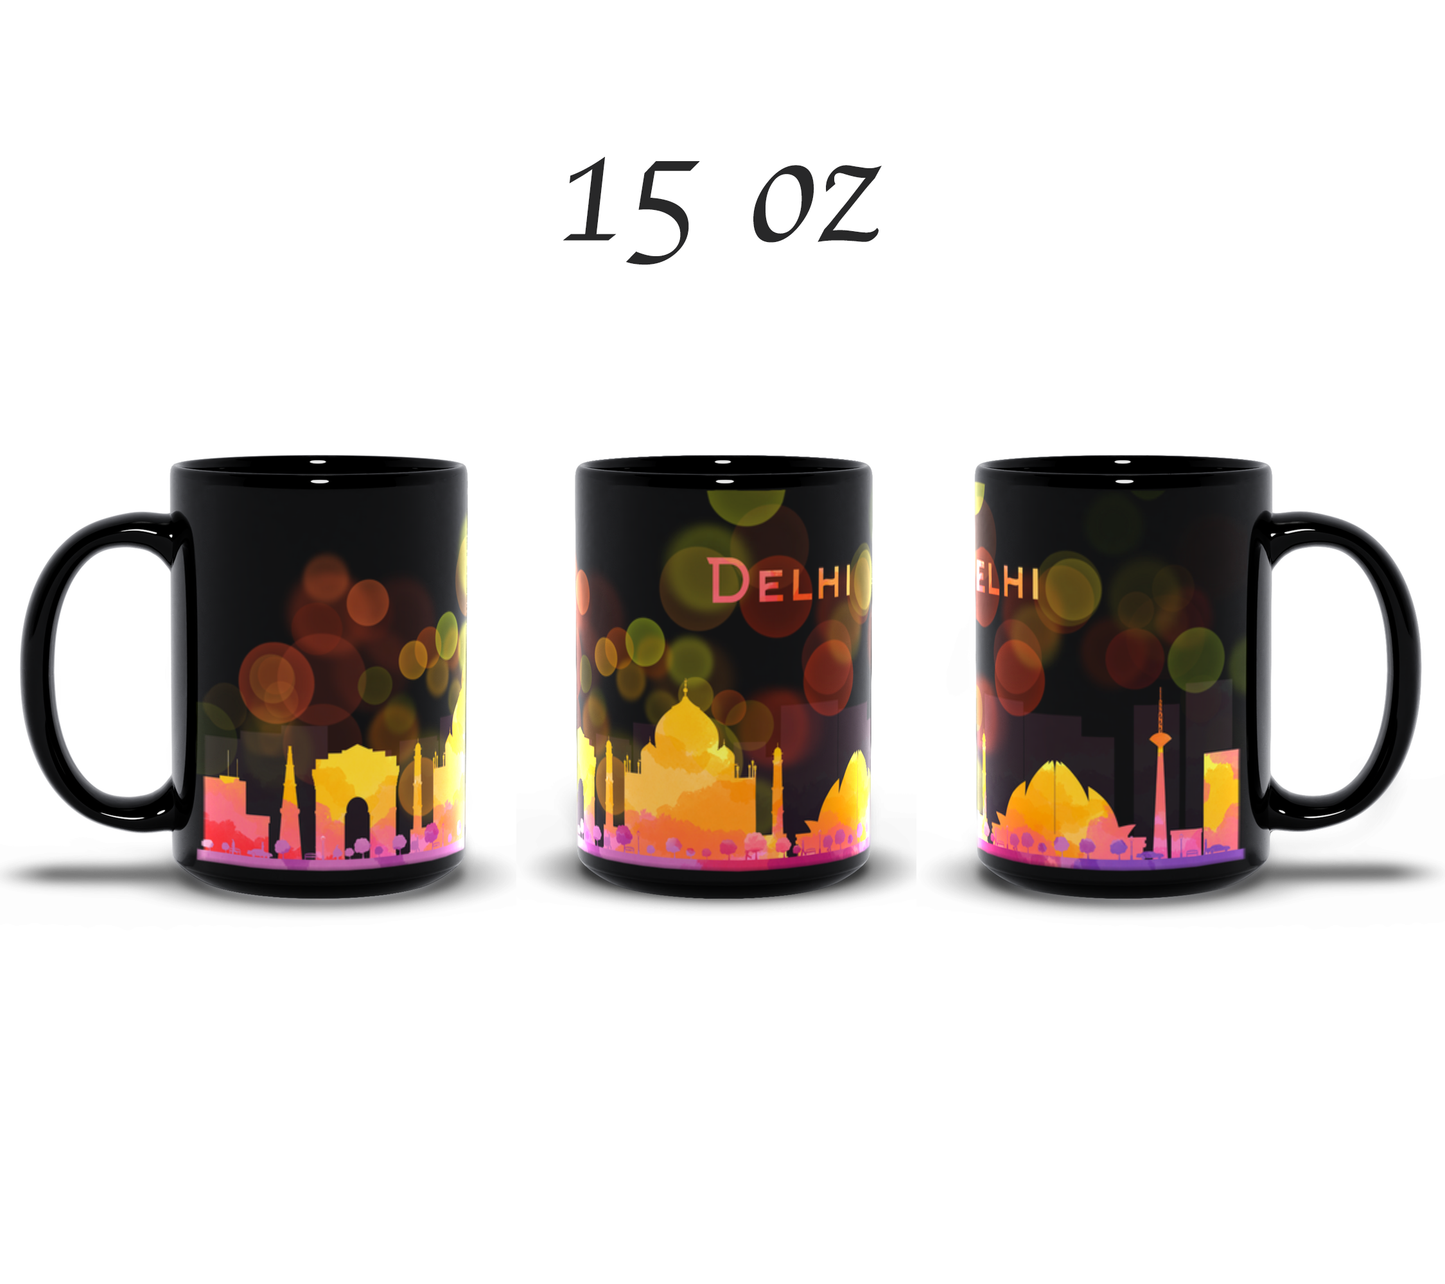 Delhi skyline mug 15oz